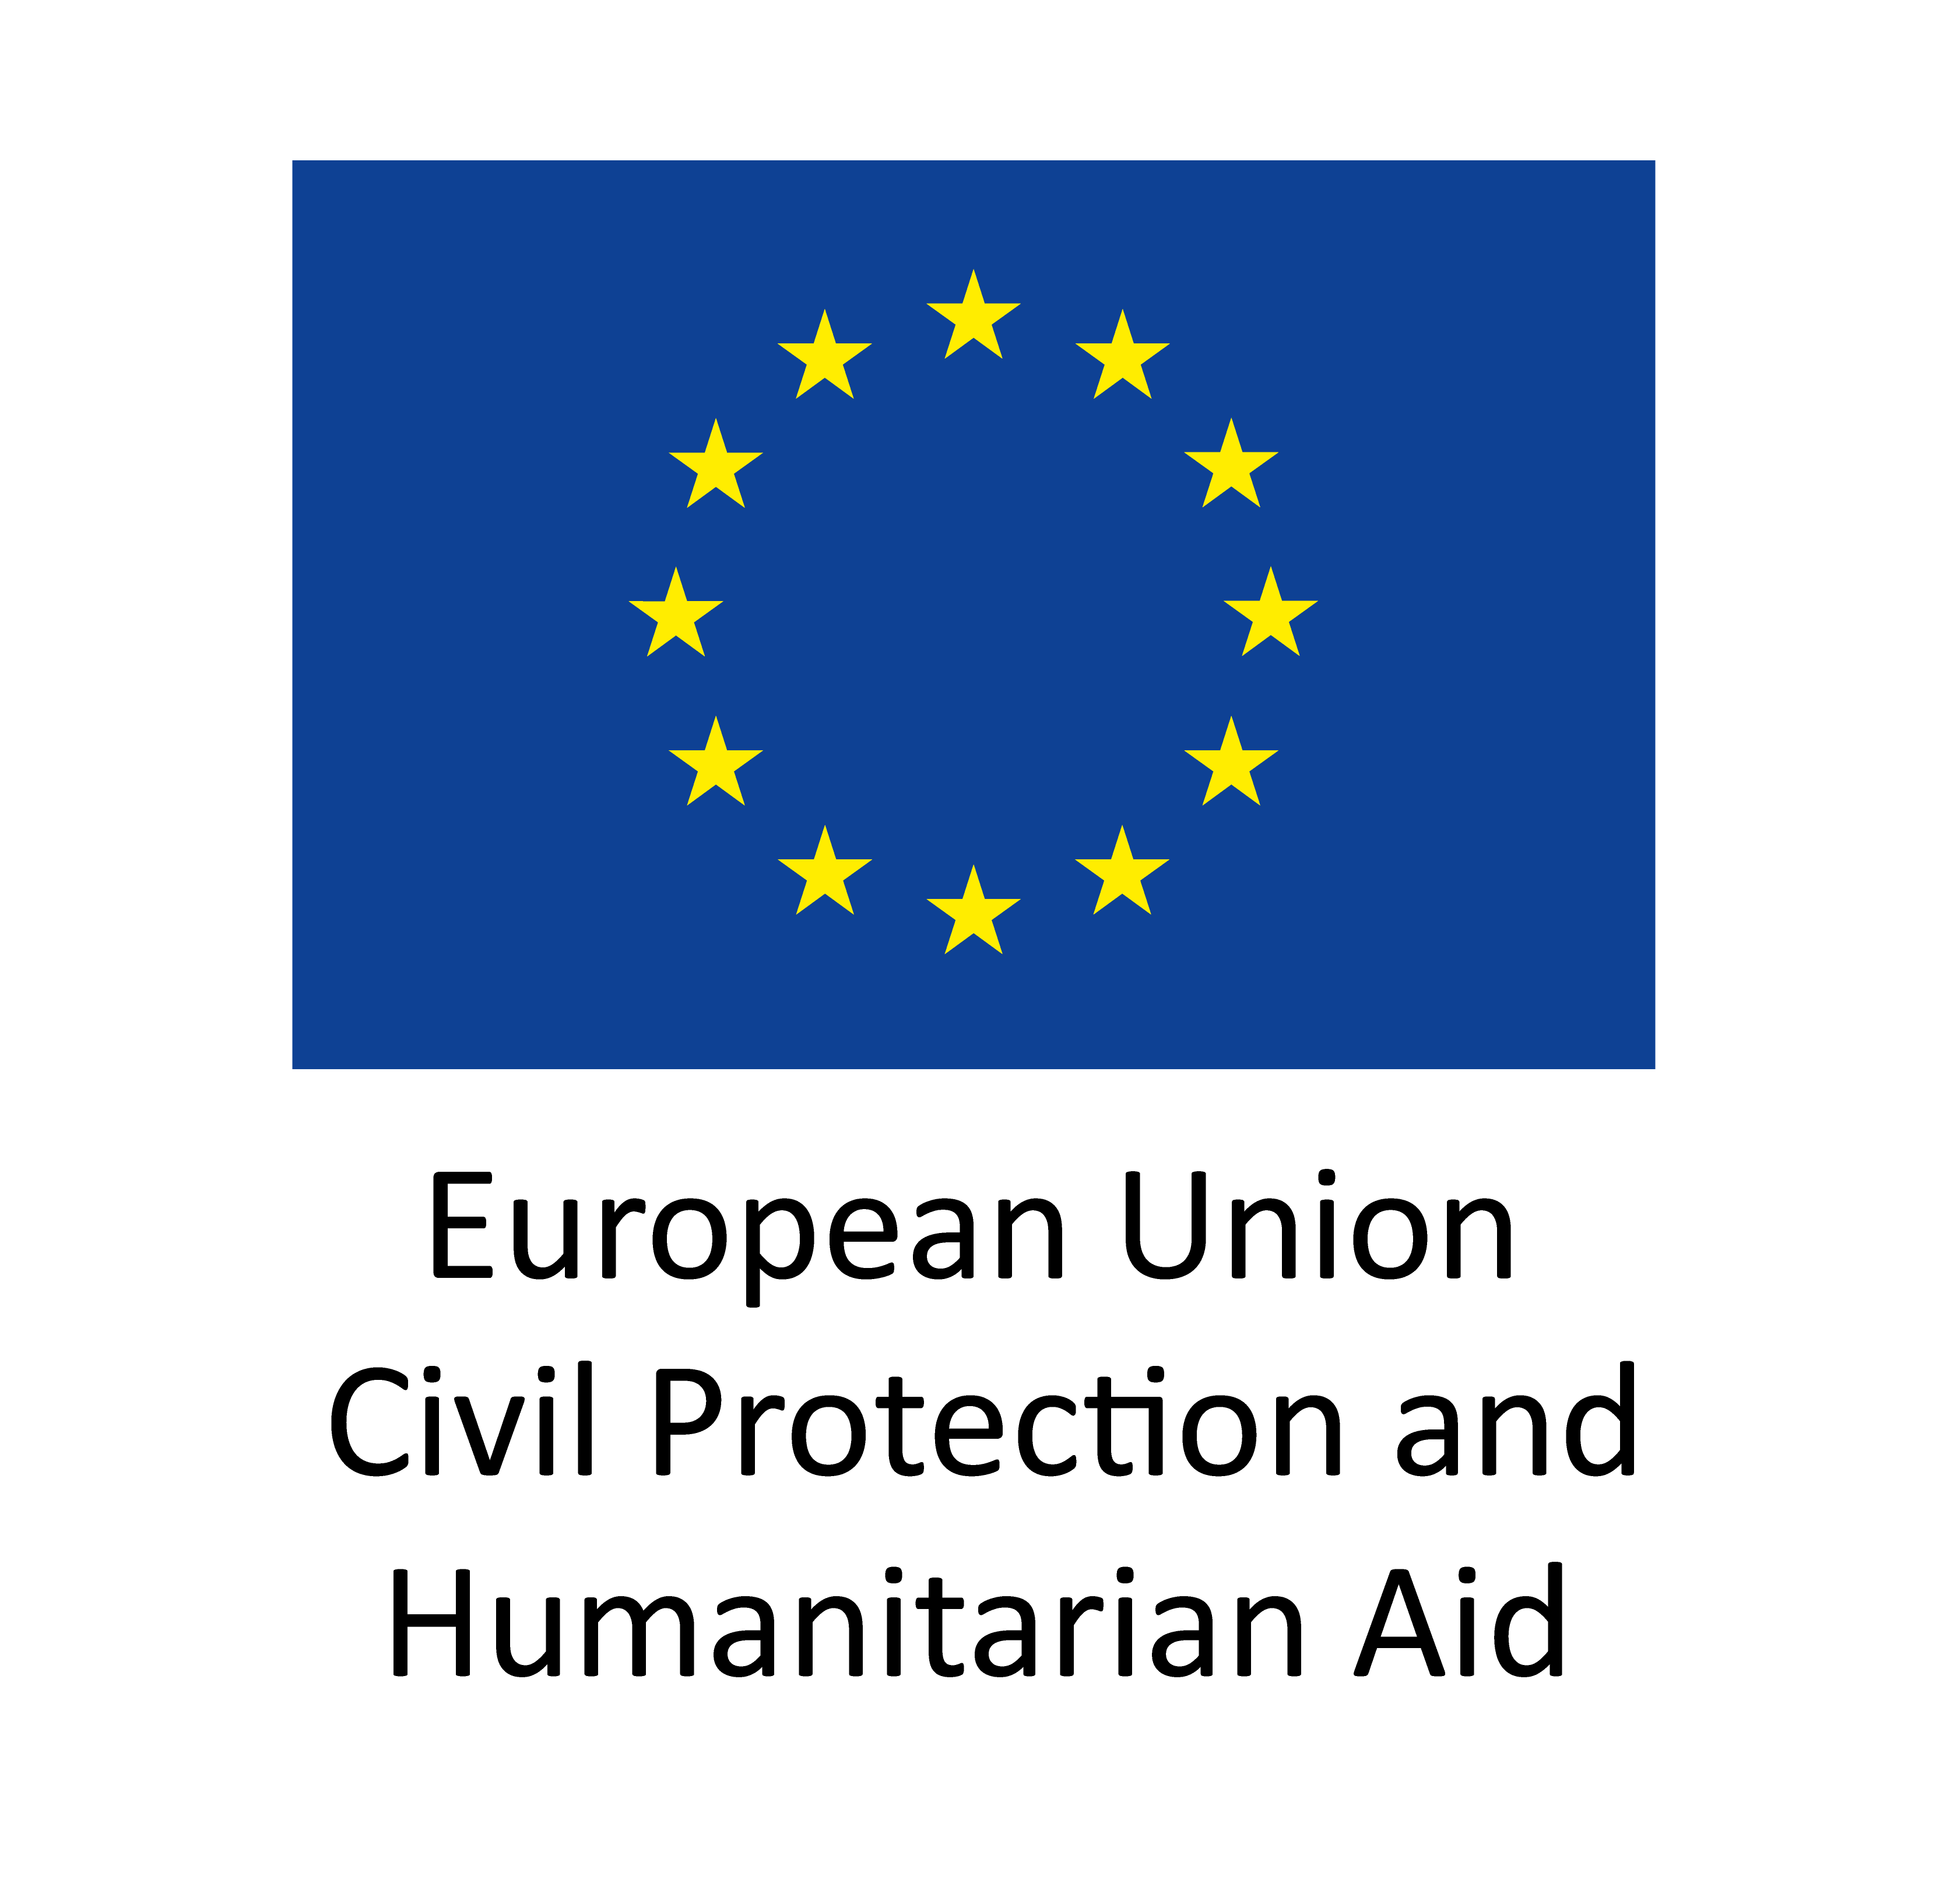 European Union Civil Protection and Humanitarian Aid